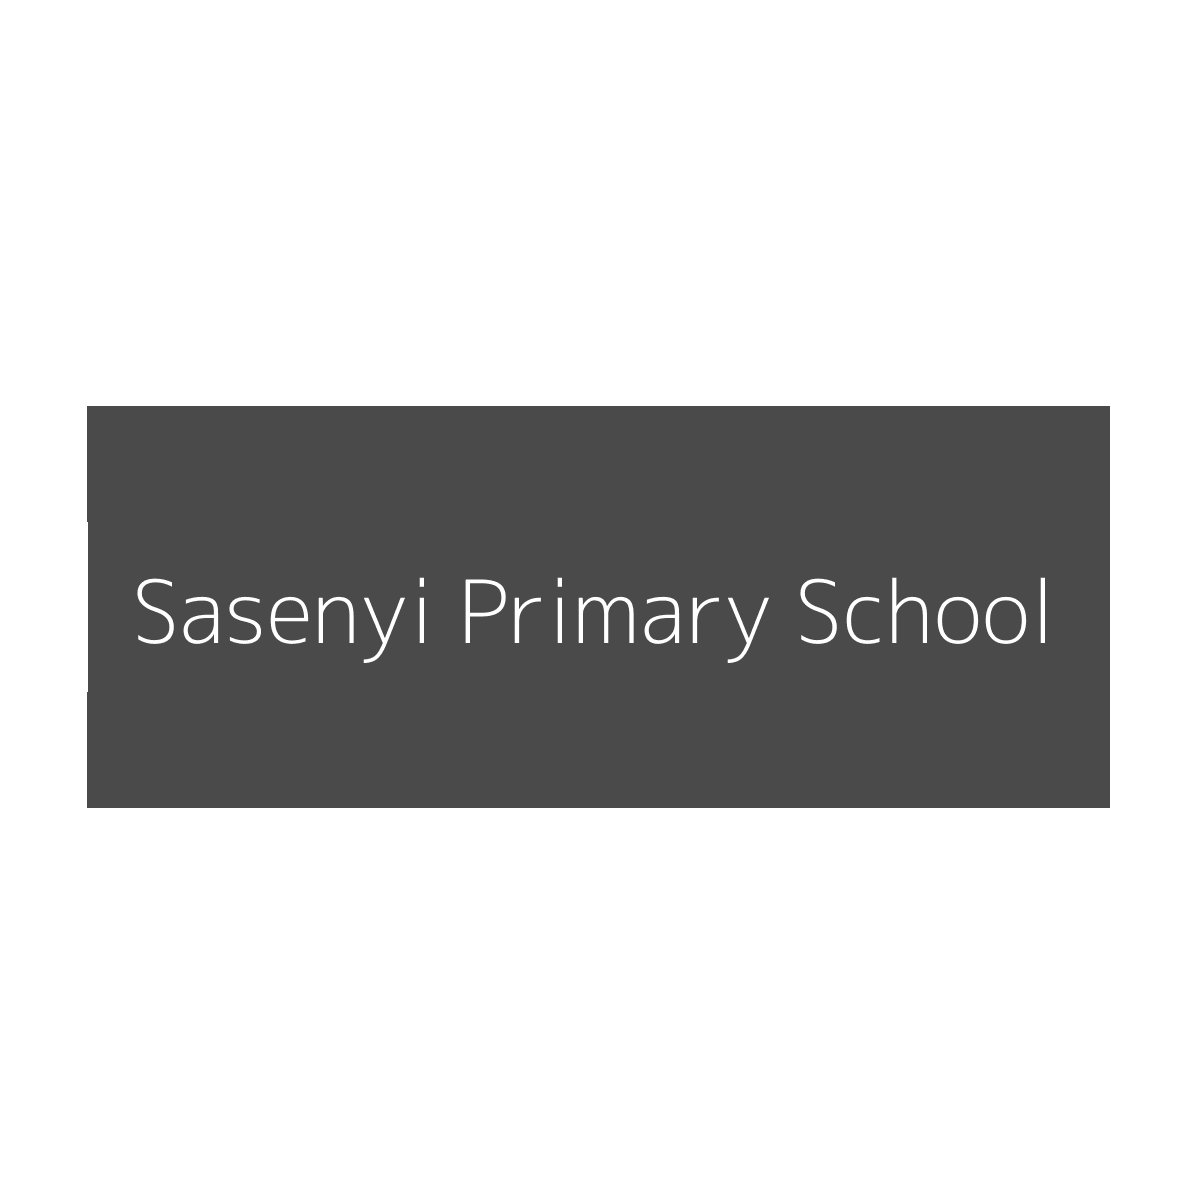 Sasenyi-Primary-School